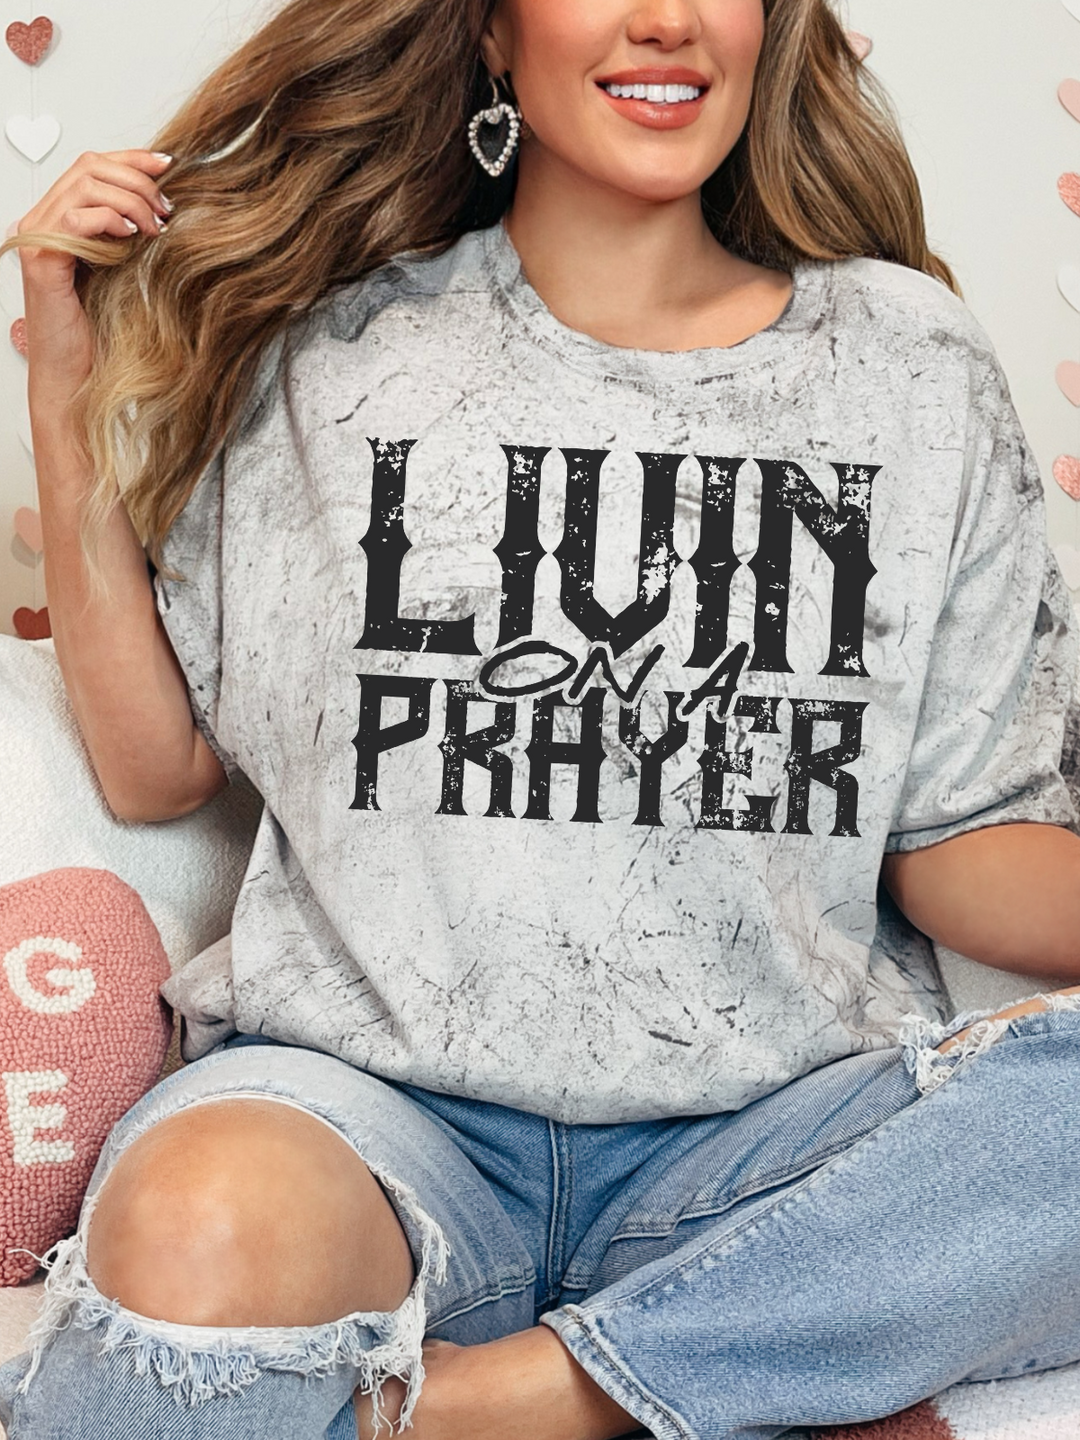 Livin’ On A Prayer Graphic Tee